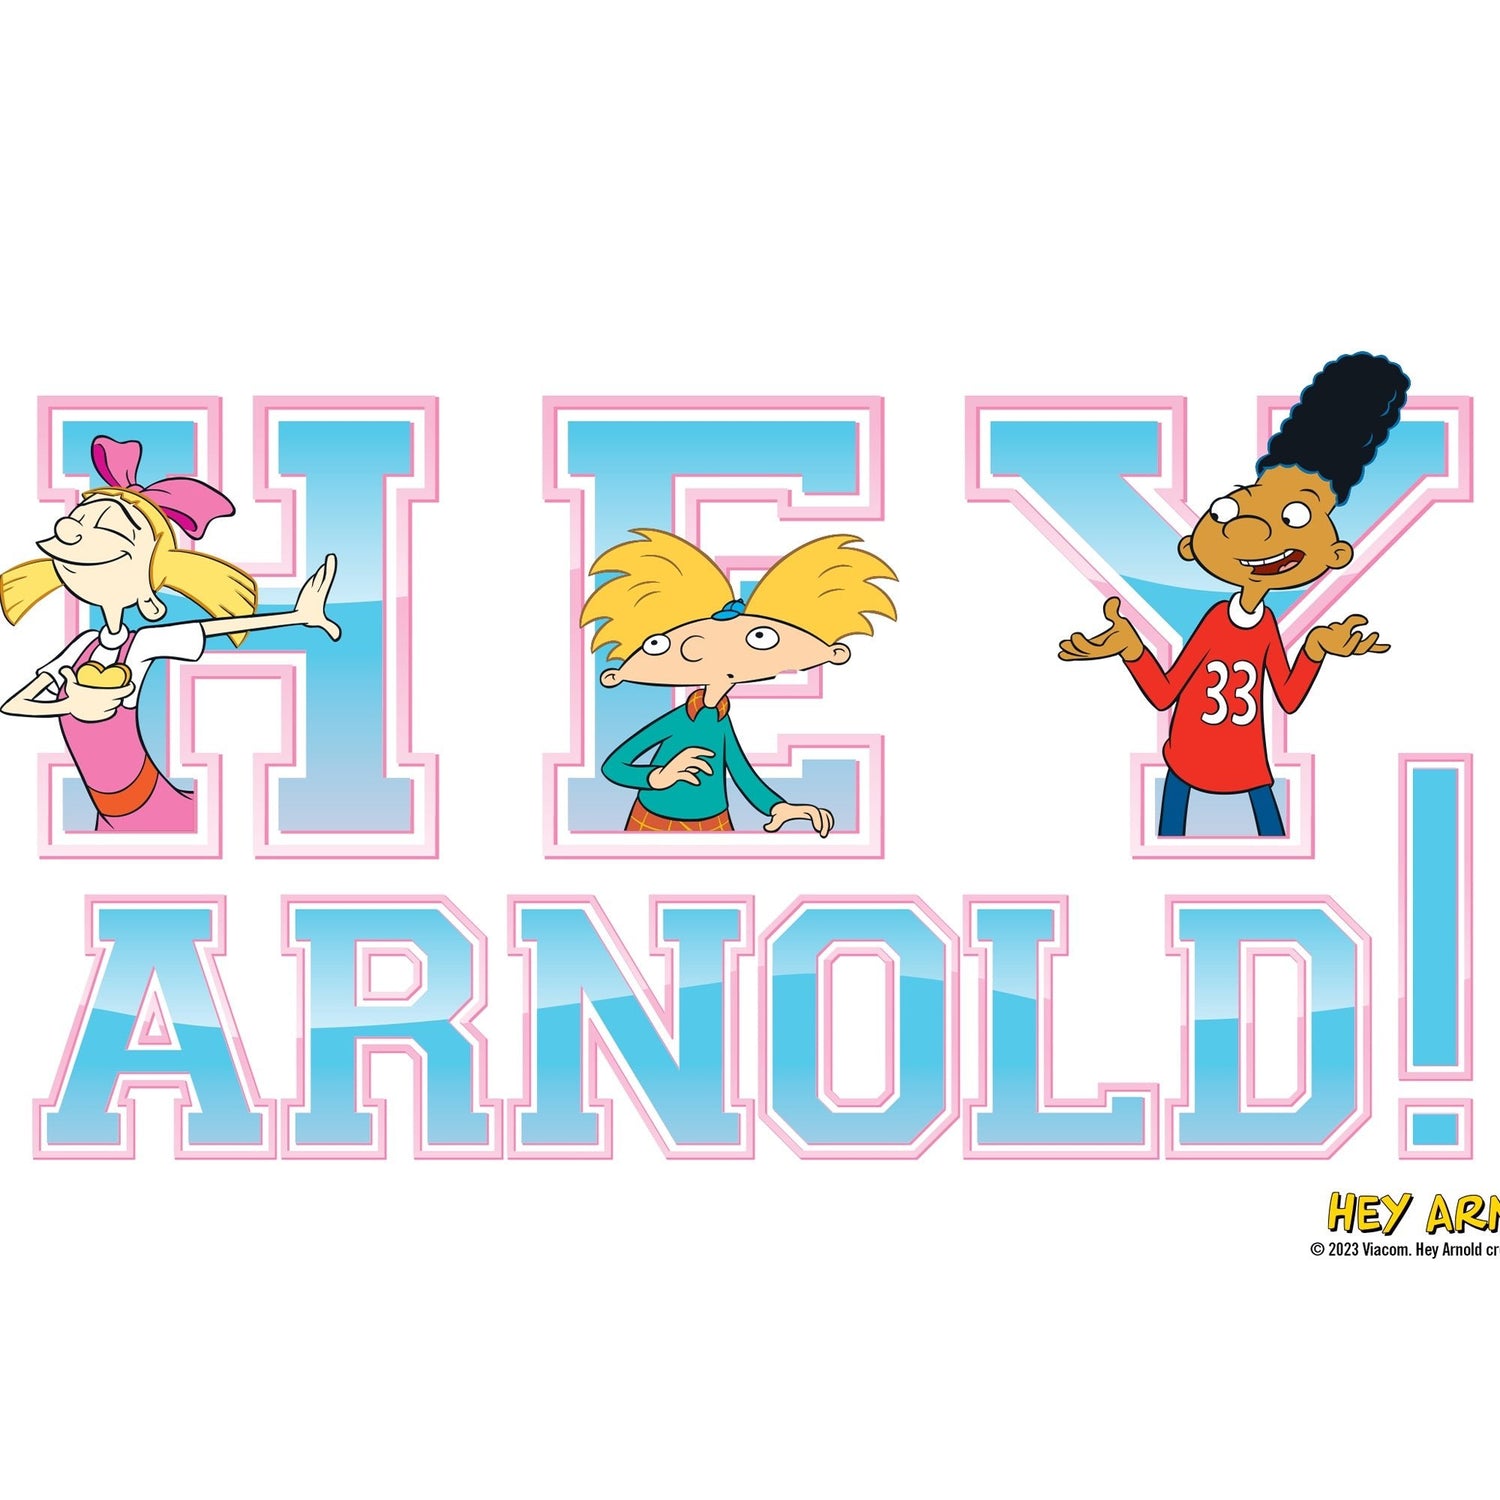 Hey Arnold! Varsity Stainless Steel Water Bottle - Paramount Shop